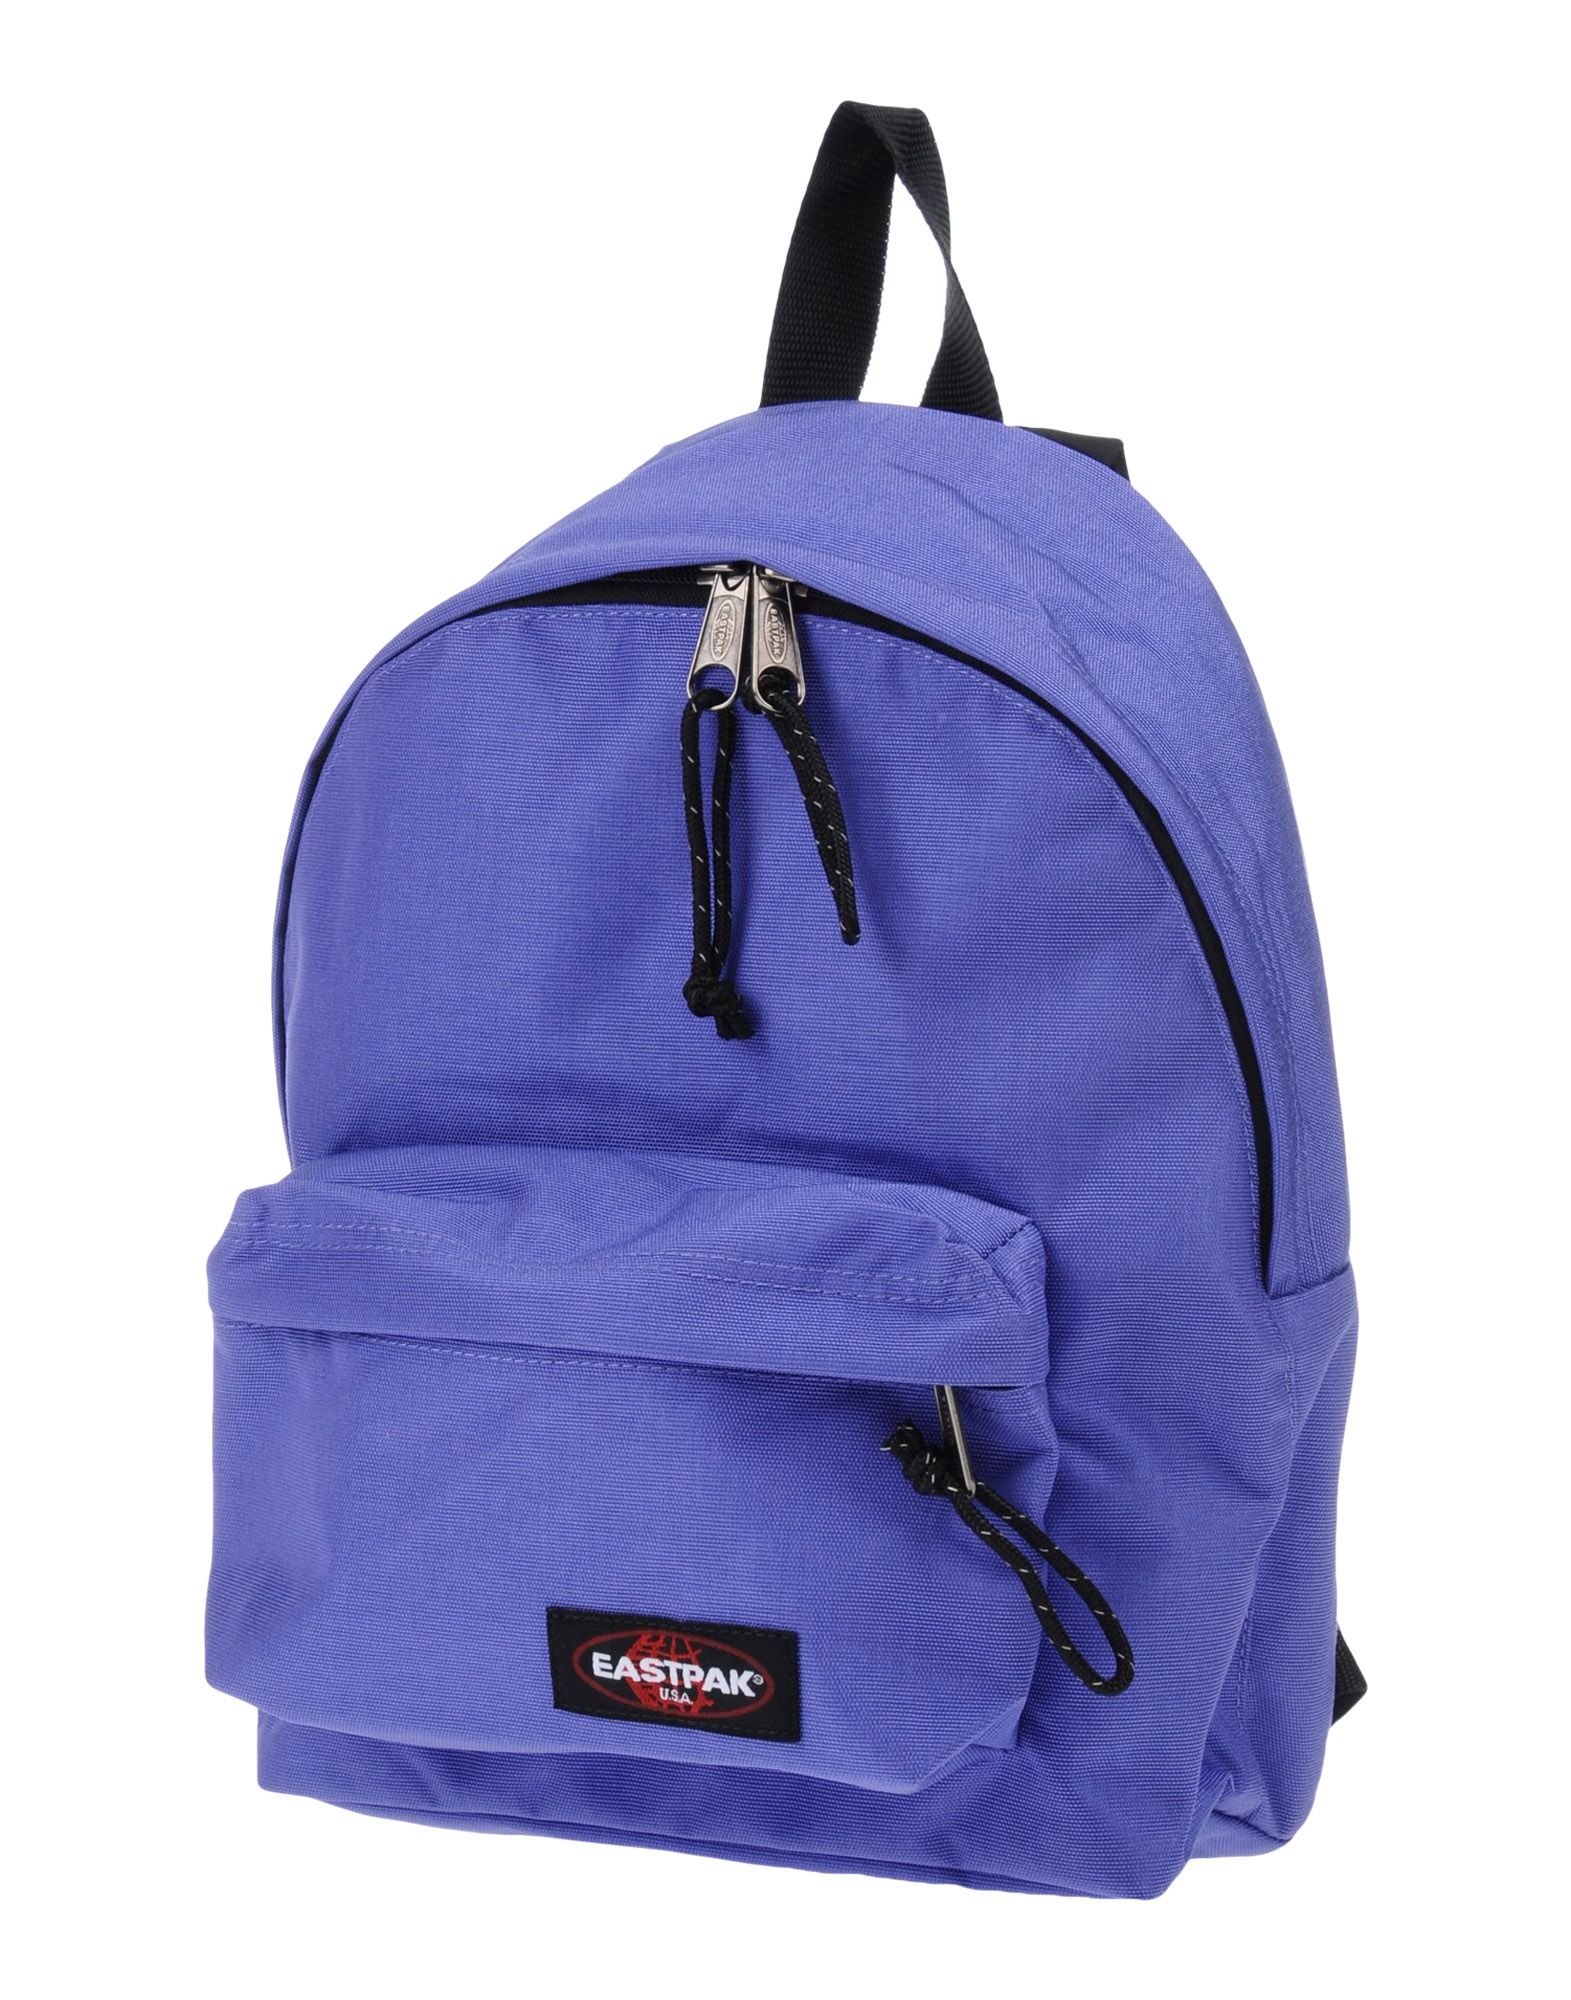 EASTPAK Backpack & fanny pack,45374310NW 1